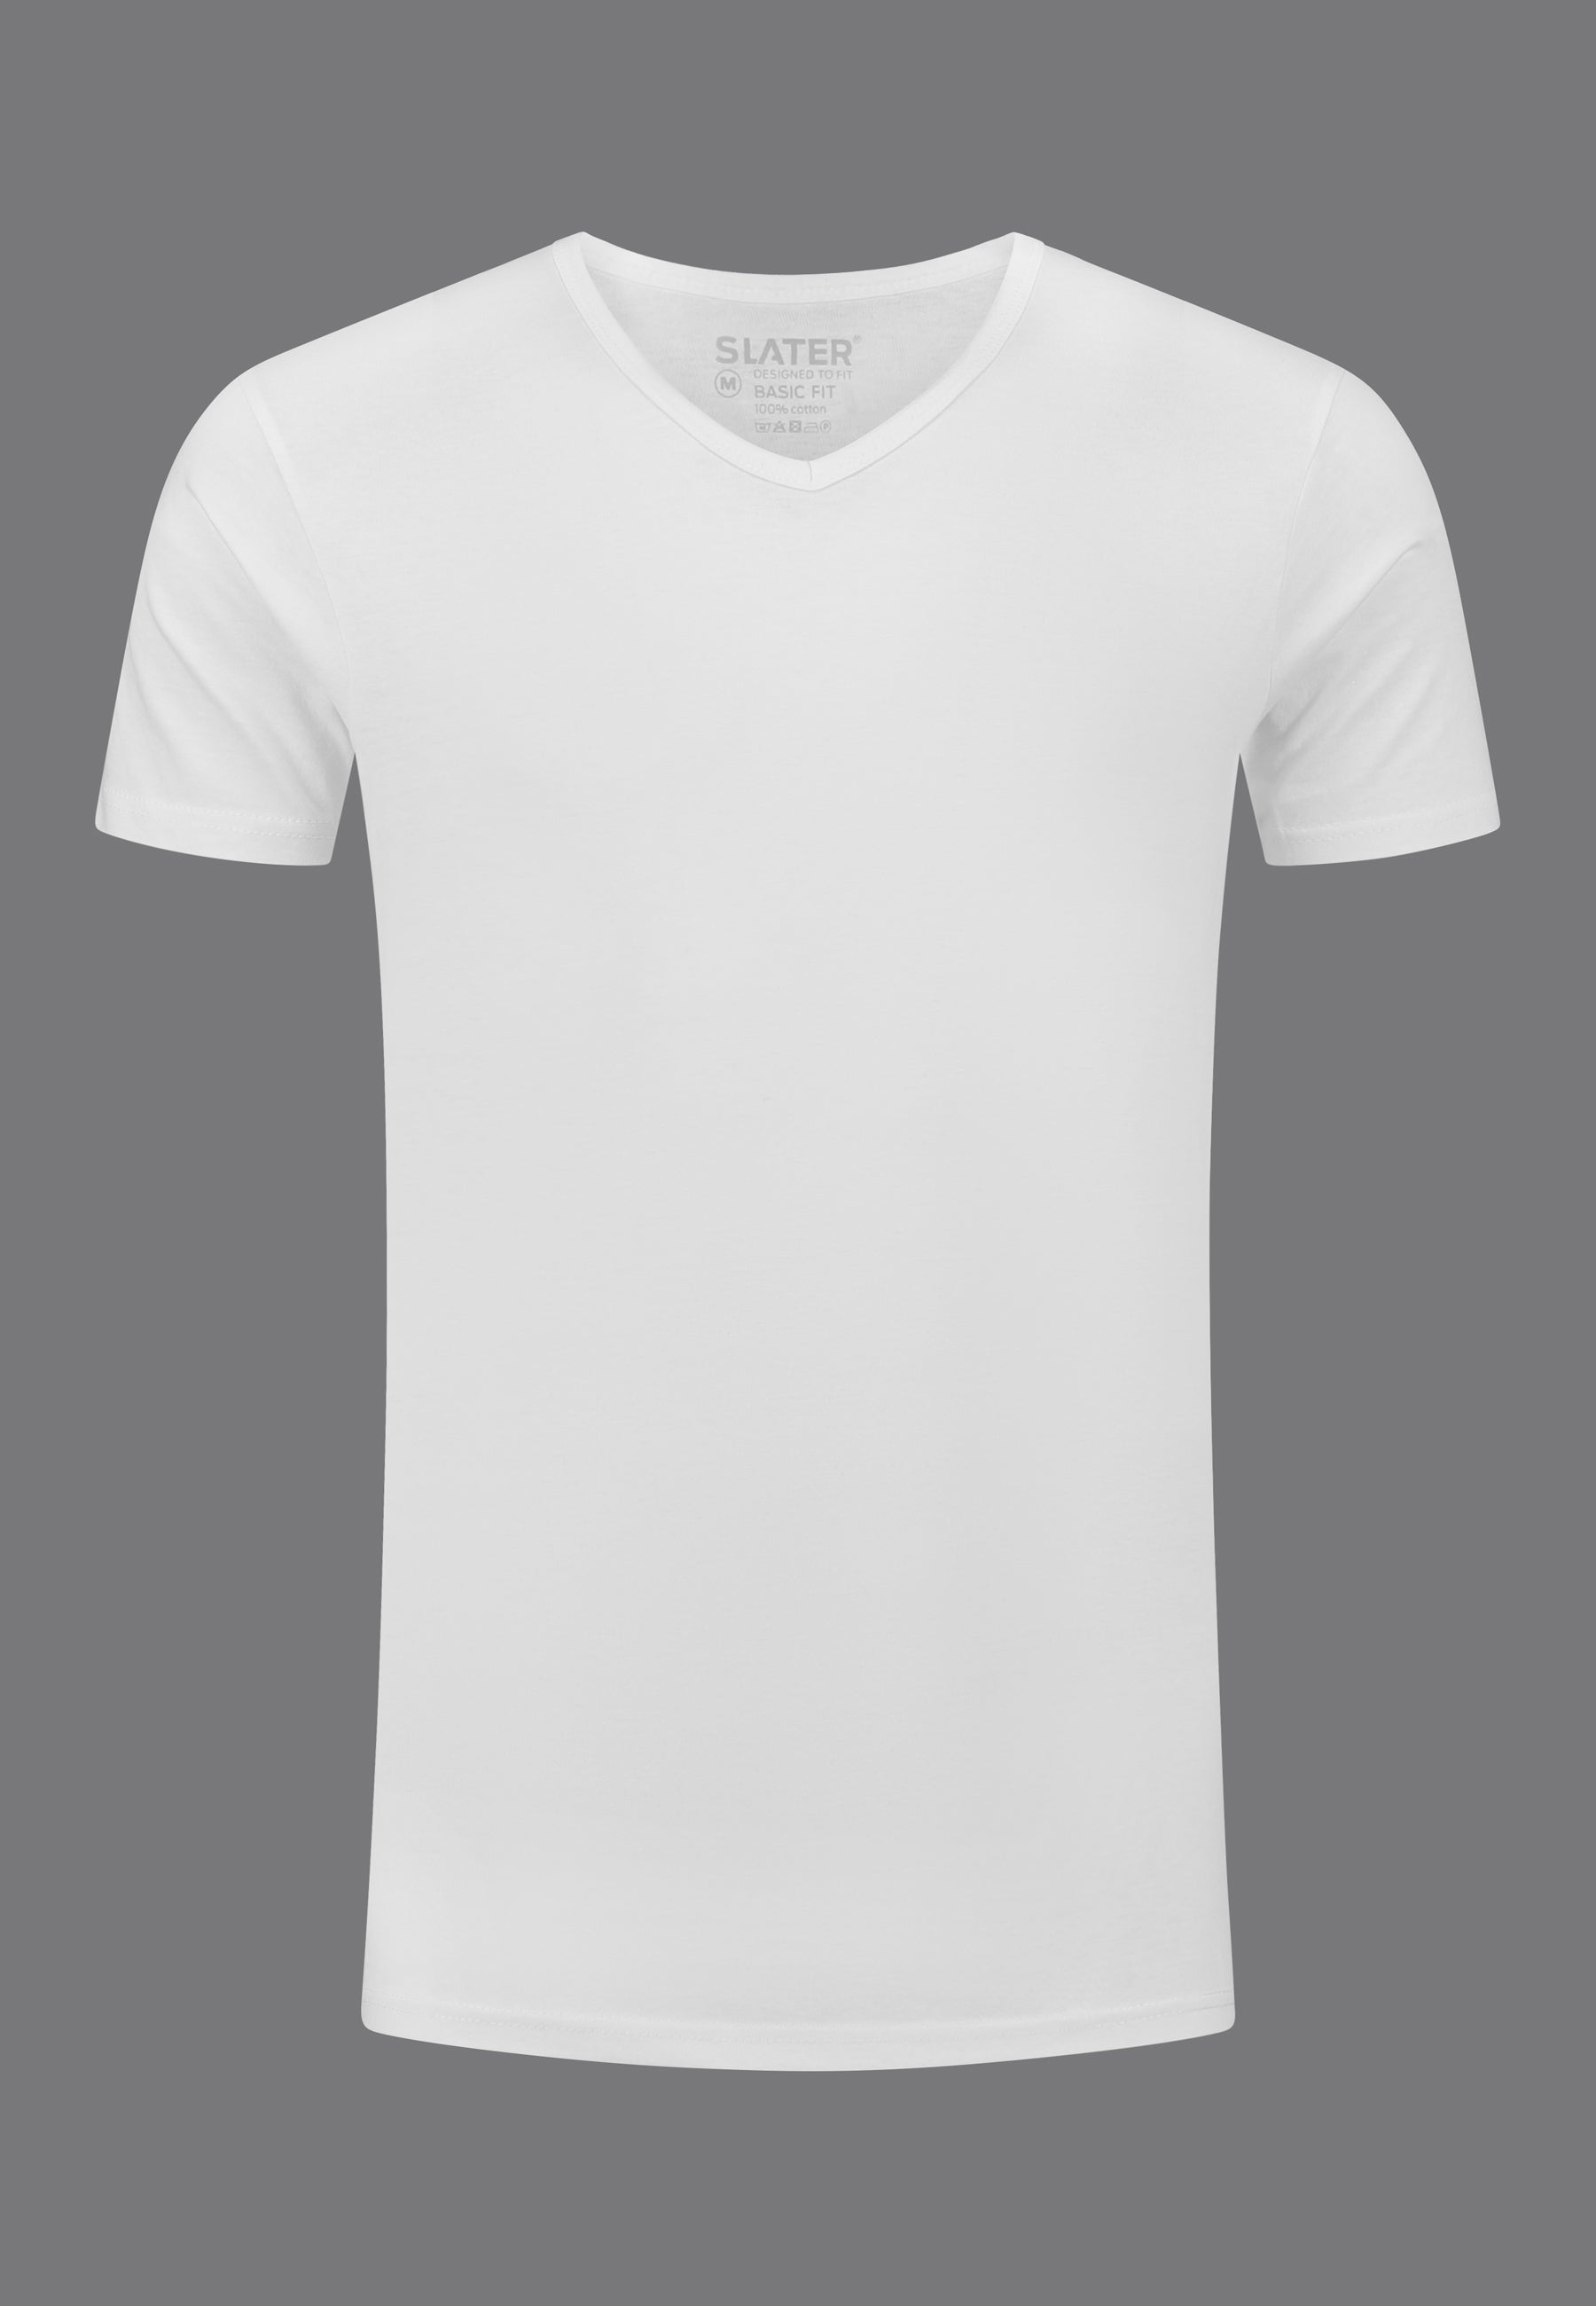 Verwacht het Terughoudendheid US dollar Basic Fit extra Long V Hals T-shirt - Wit (+7cm) - Slaterstore